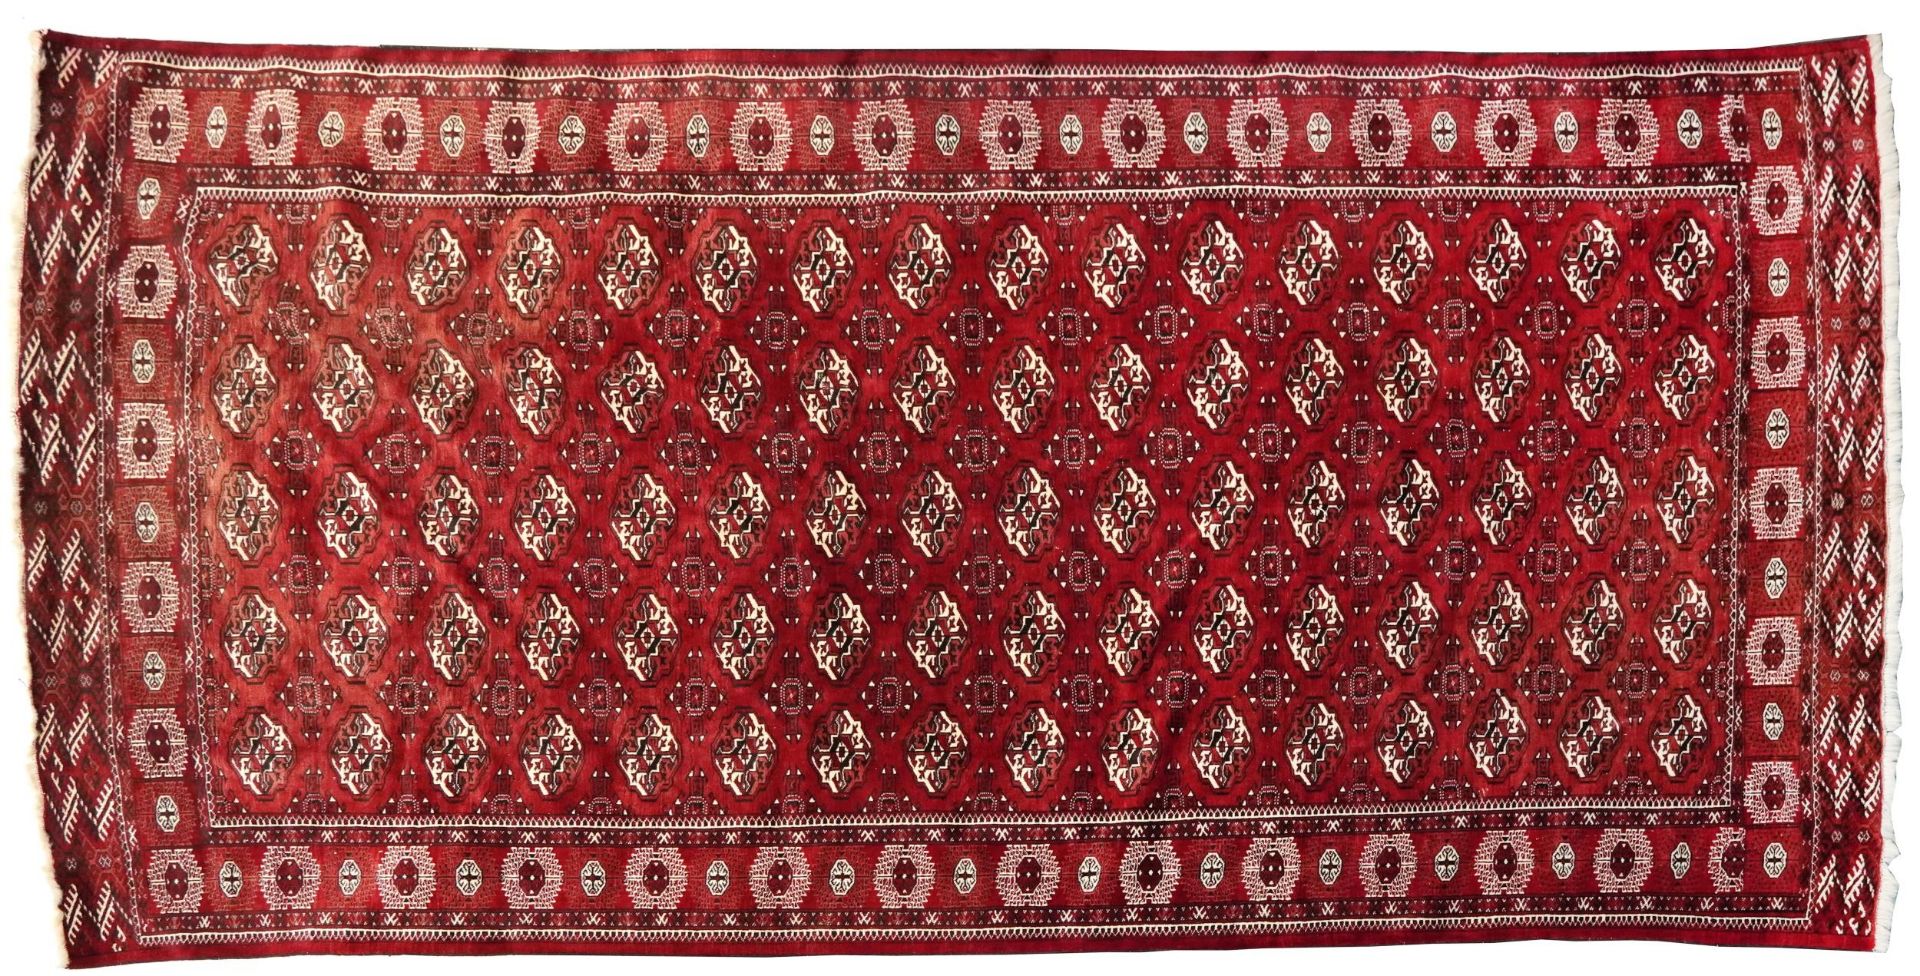 Rectangular Persian Turkmen red ground carpet having an all over geometric design, 345cm x 215cm